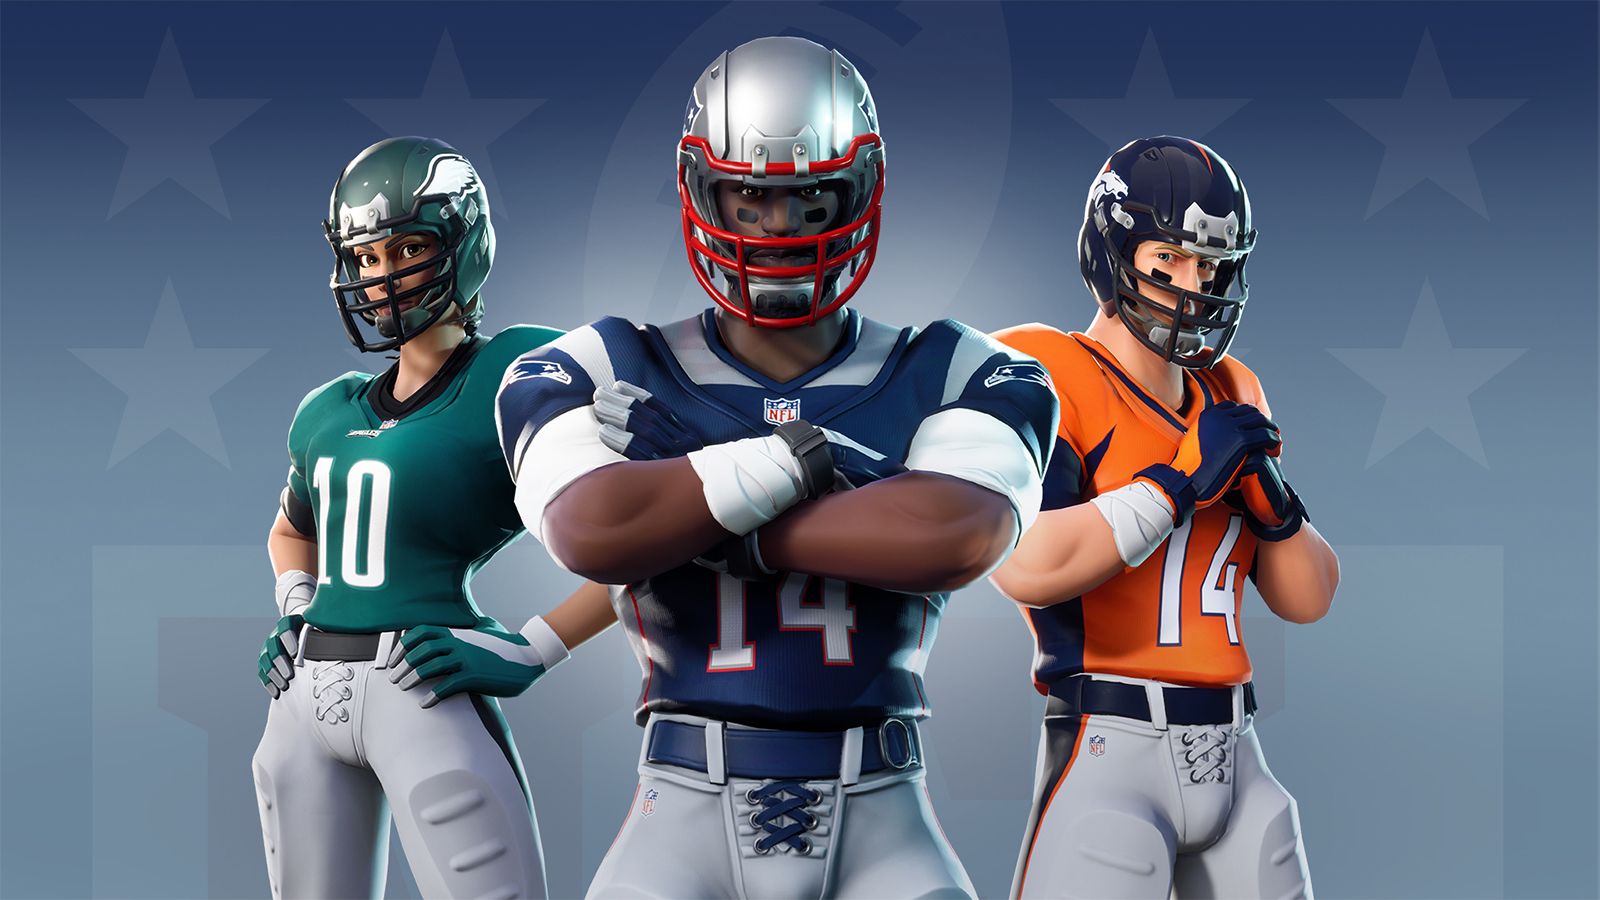 NFL skins coming soon to Fortnite